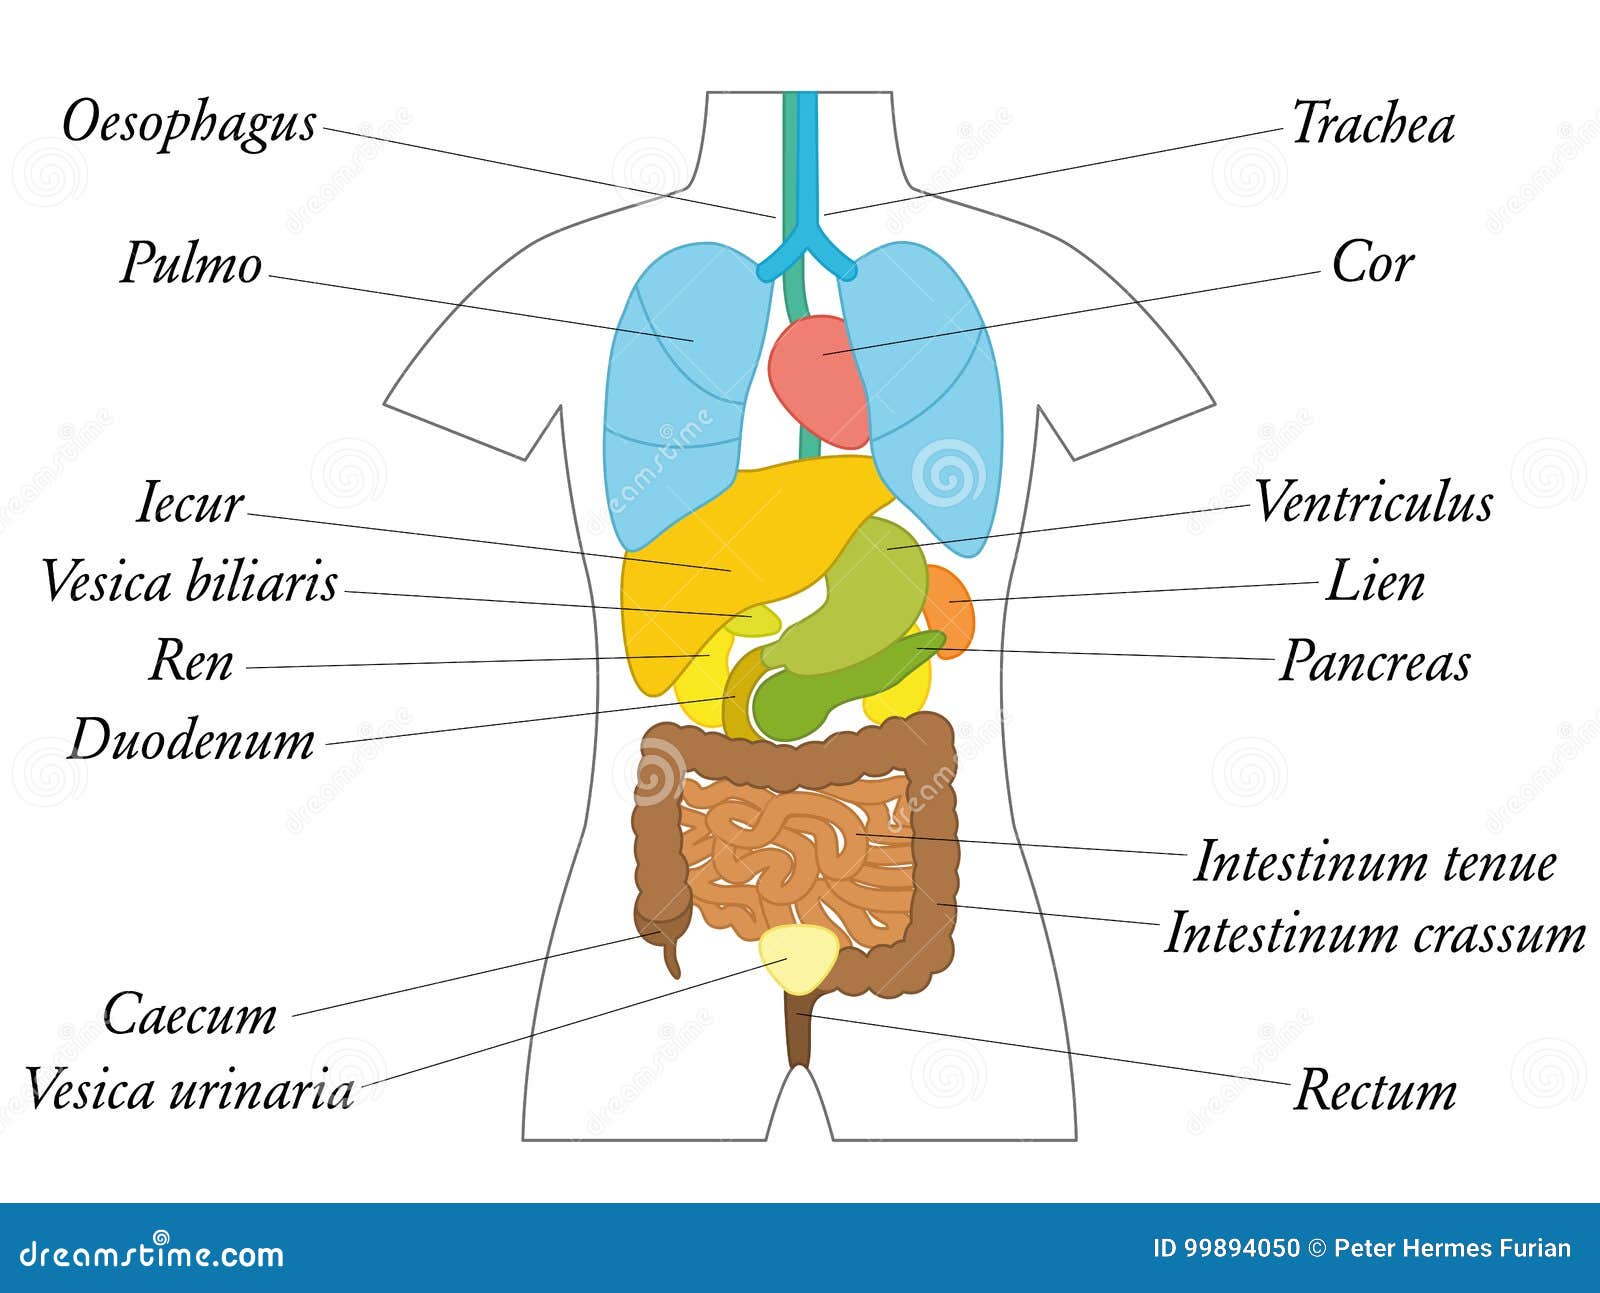 Anatomy Chart Of Internal Organs